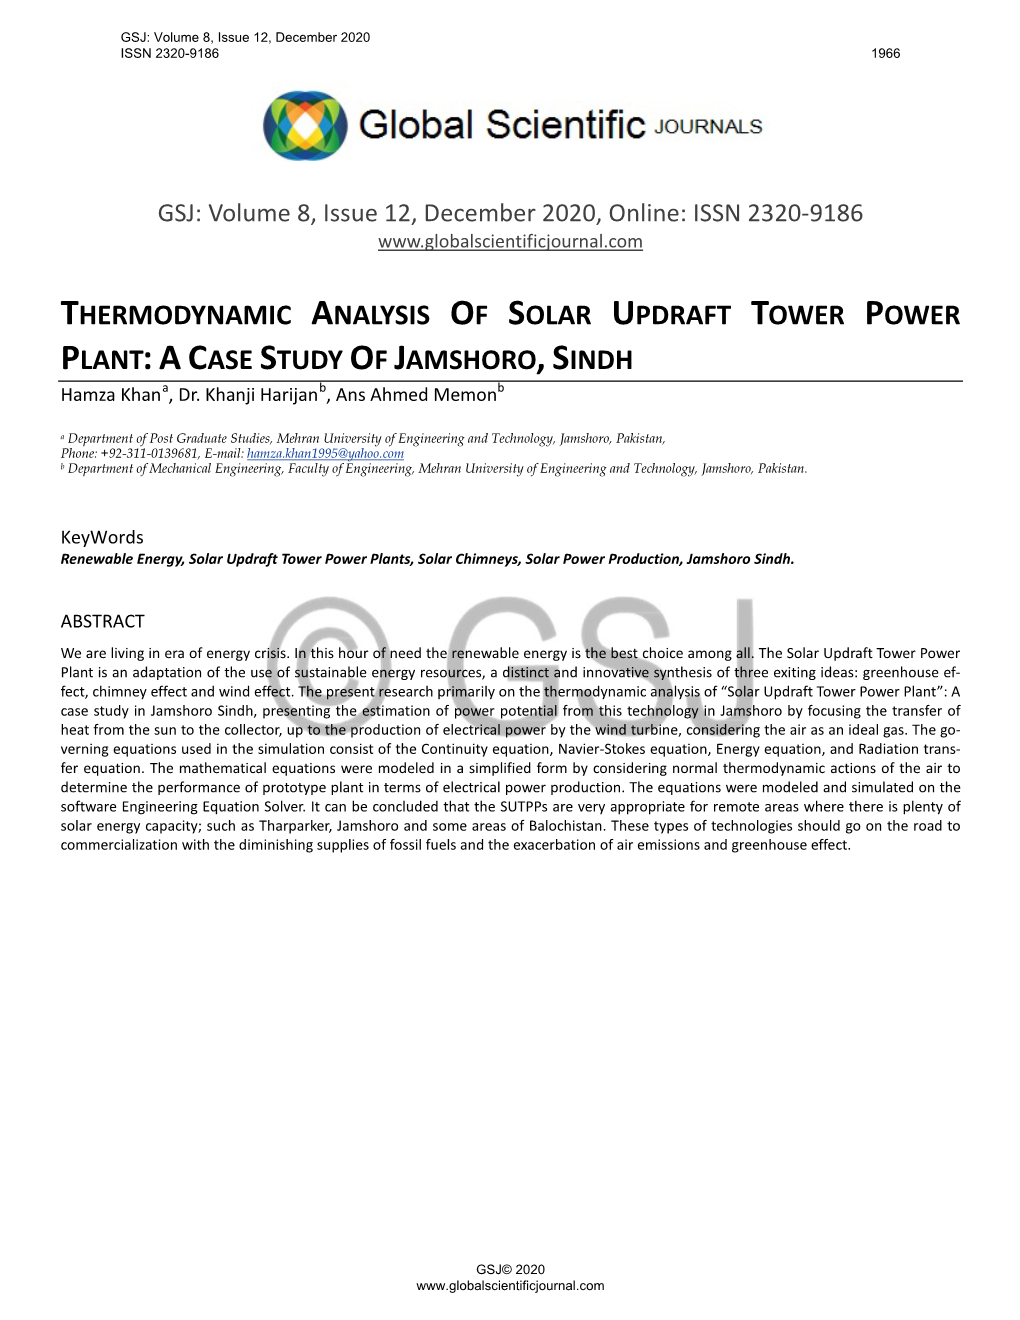 Thermodynamic Analysis of Solar Updraft Tower Power Plant:Acase Study of Jamshoro,Sindh